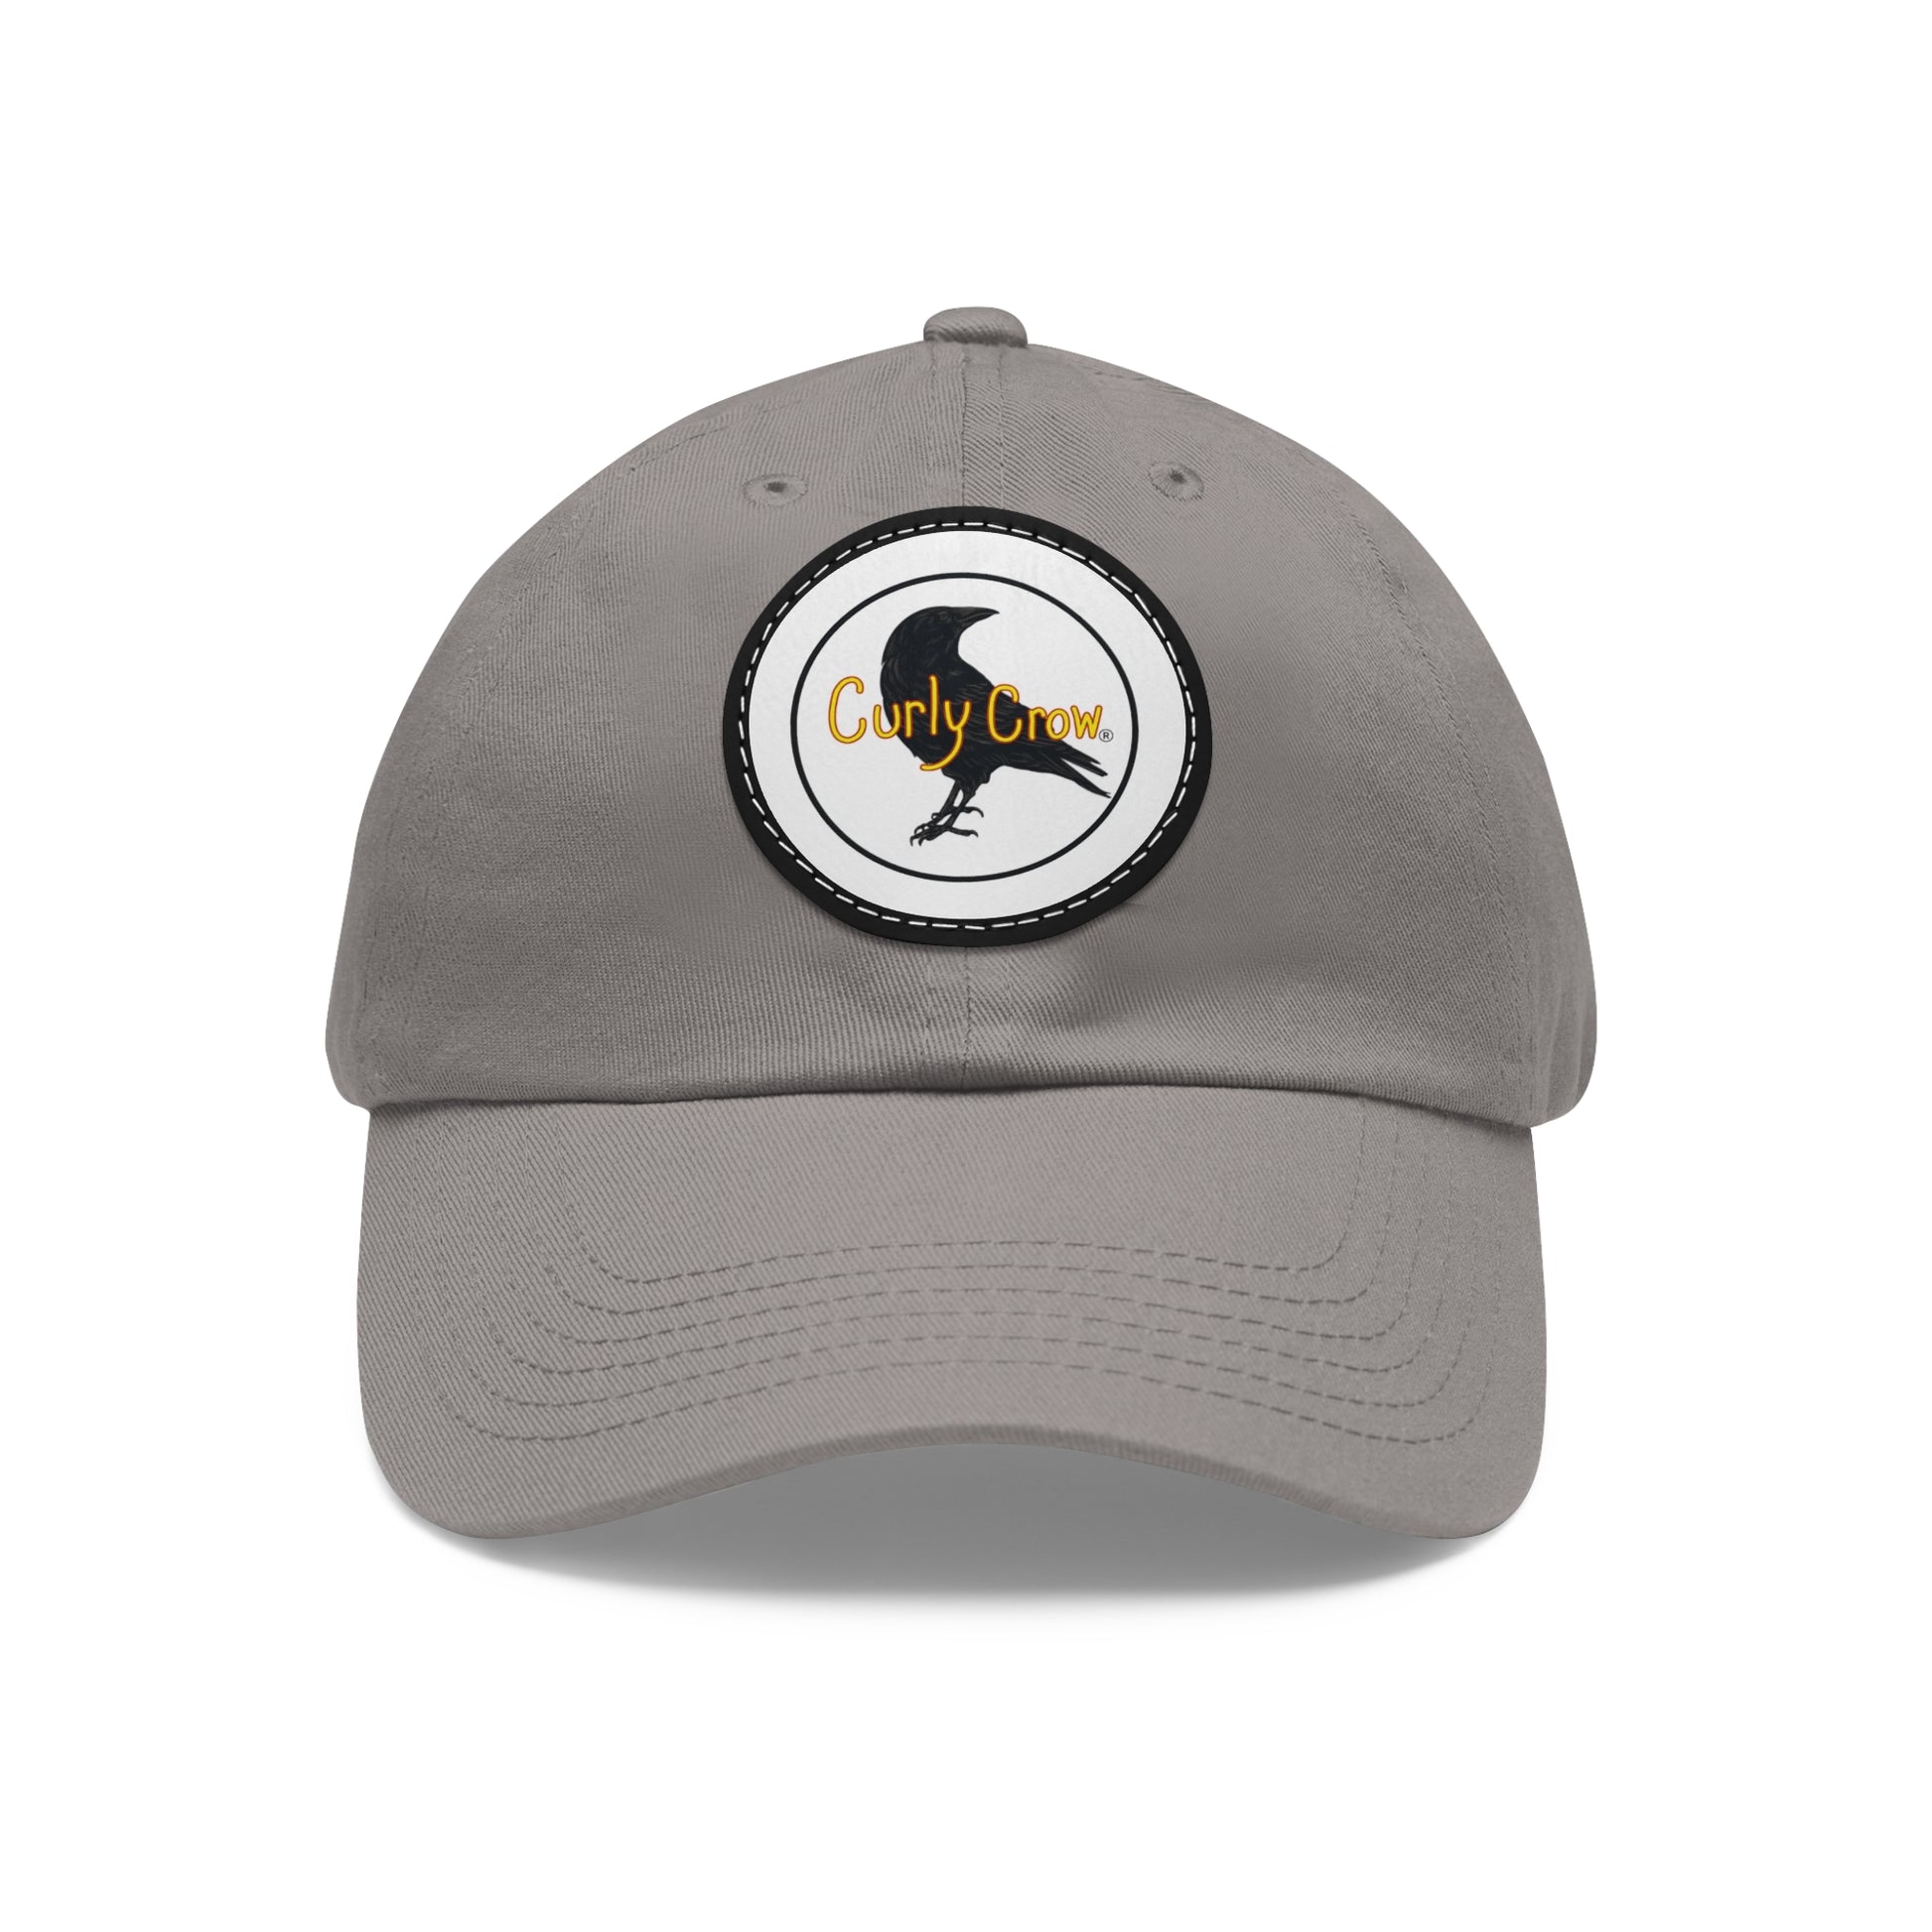 Curly Crow cap - grey baseball hat